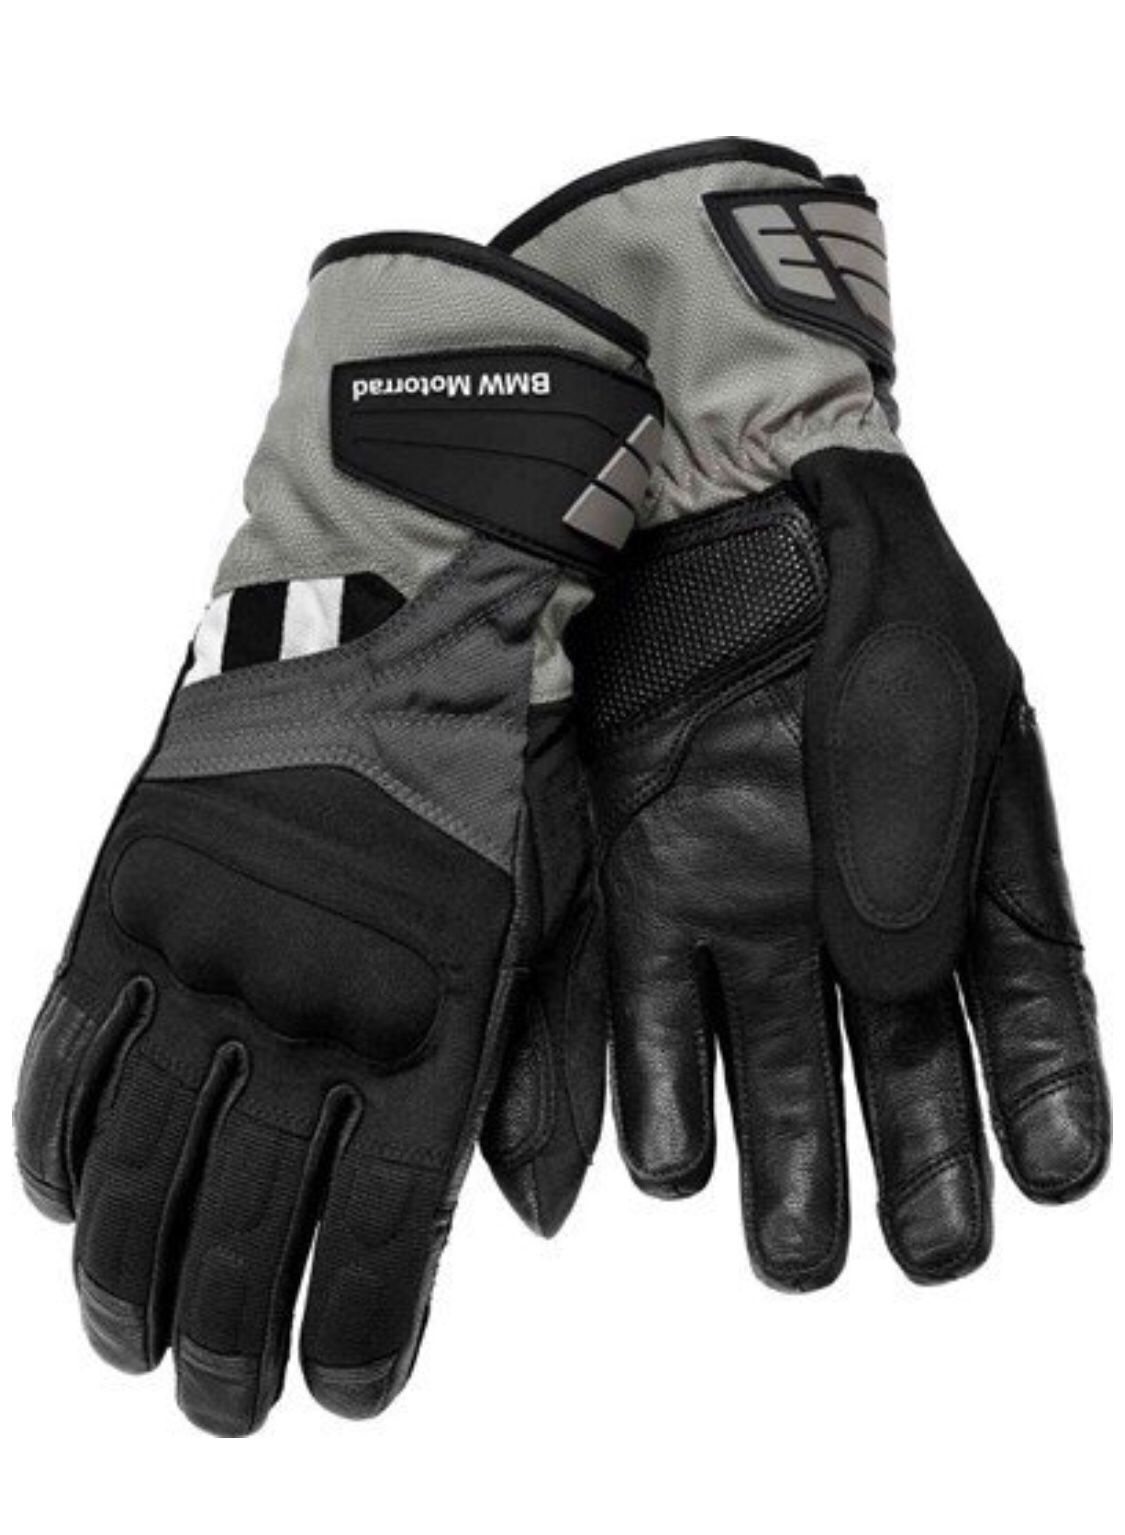 BMW Genuine Motorcycle Motorrad GS Dry, men's glove Size 6 1/2